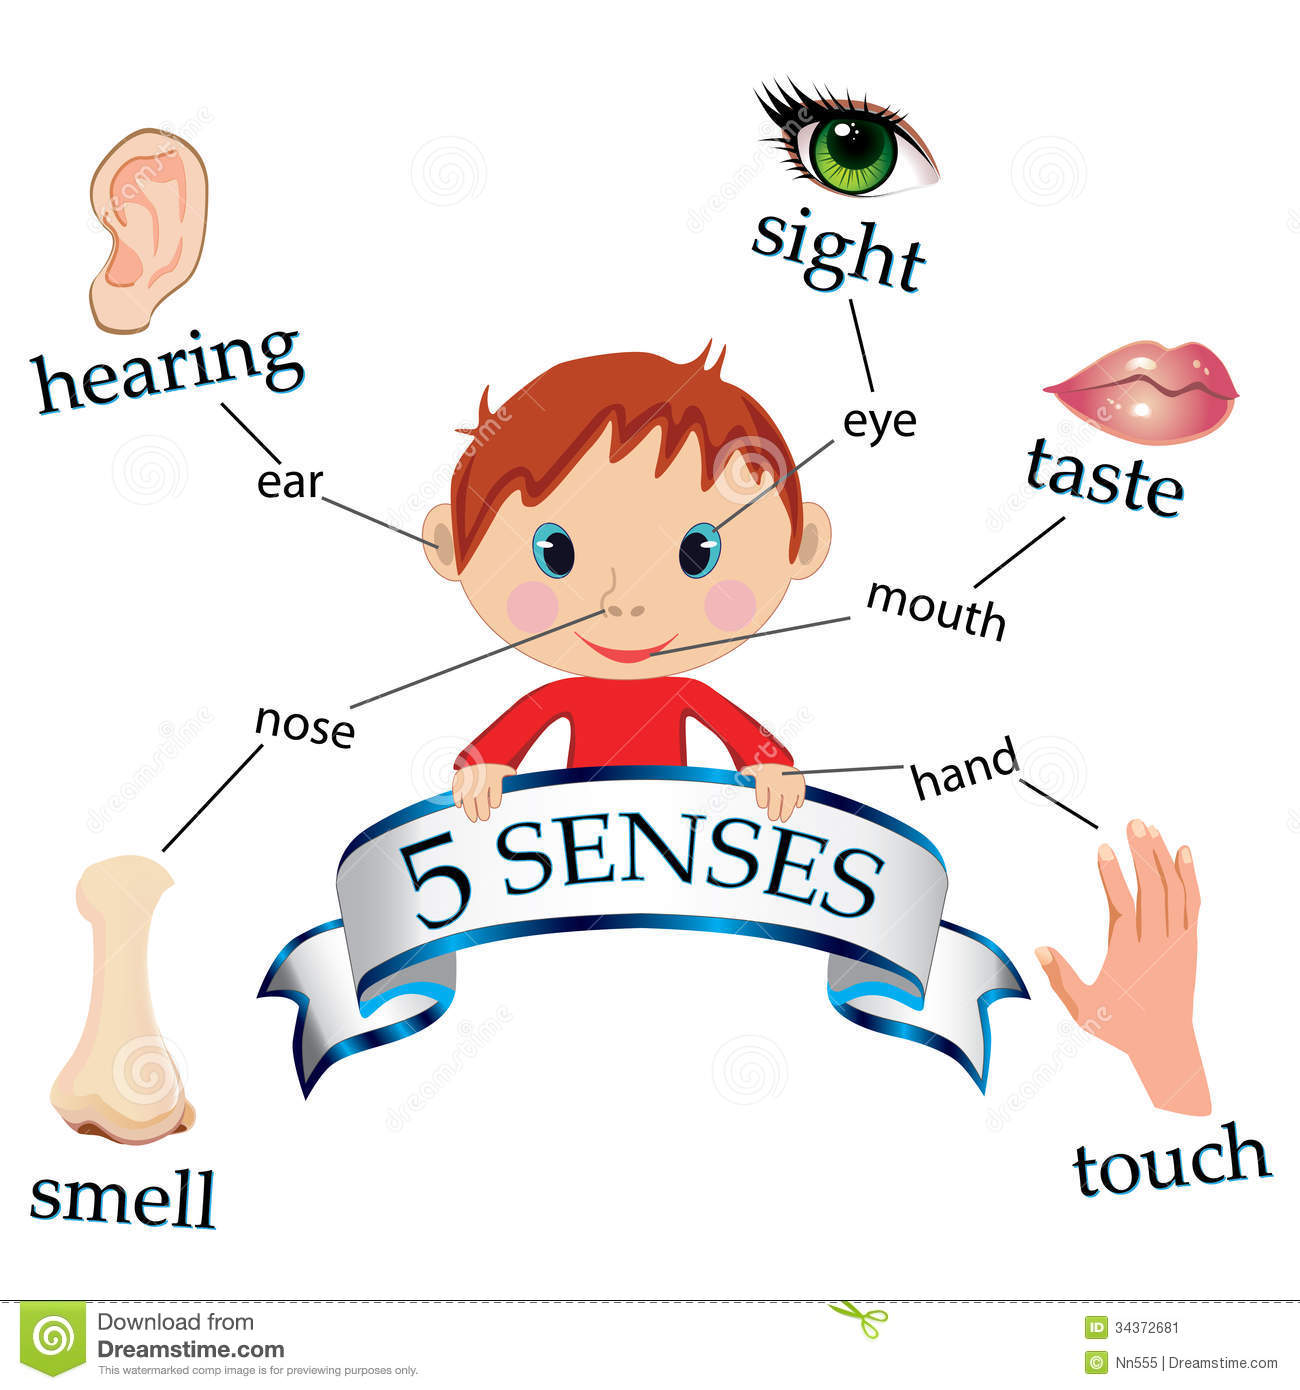 Organs pencil and in. 5 senses clipart sence